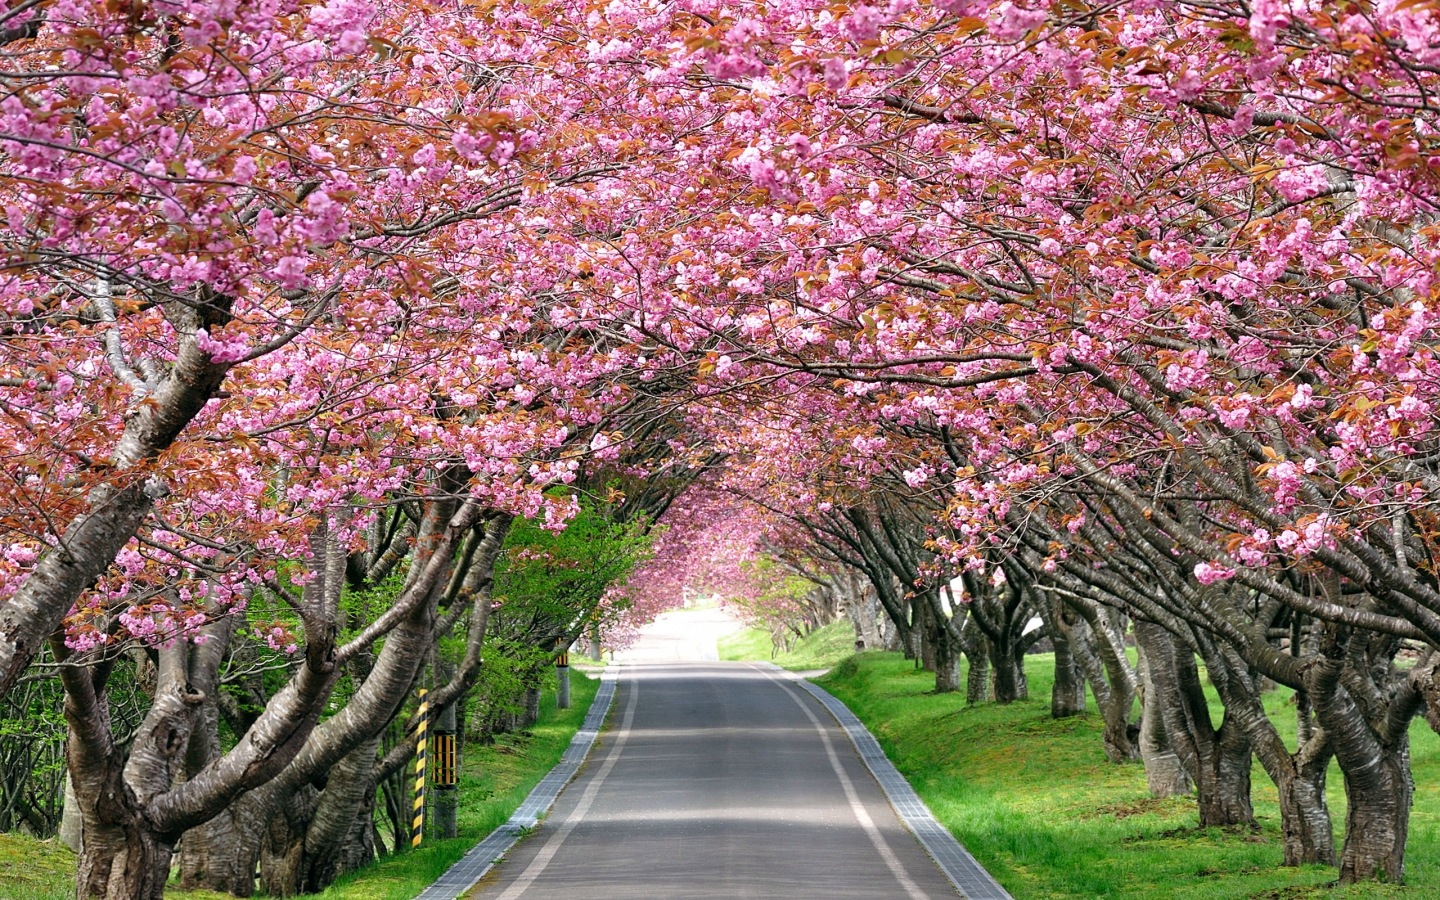 Splendid Cherry Blossom for 1440 x 900 widescreen resolution